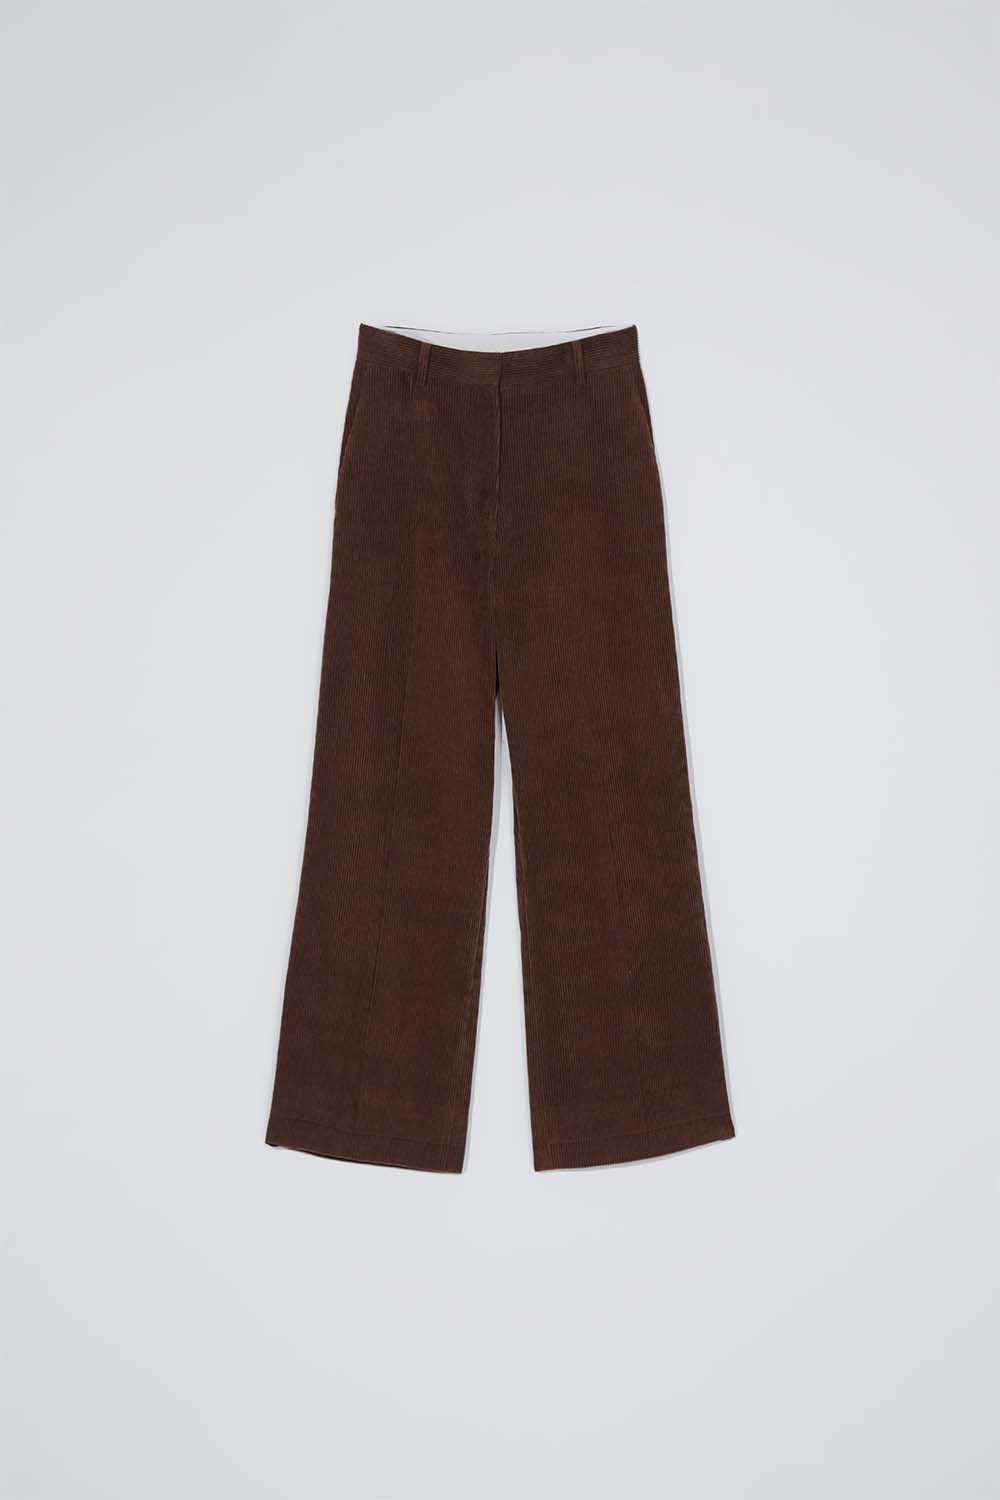 (Best Product)Corduroy pants_brown